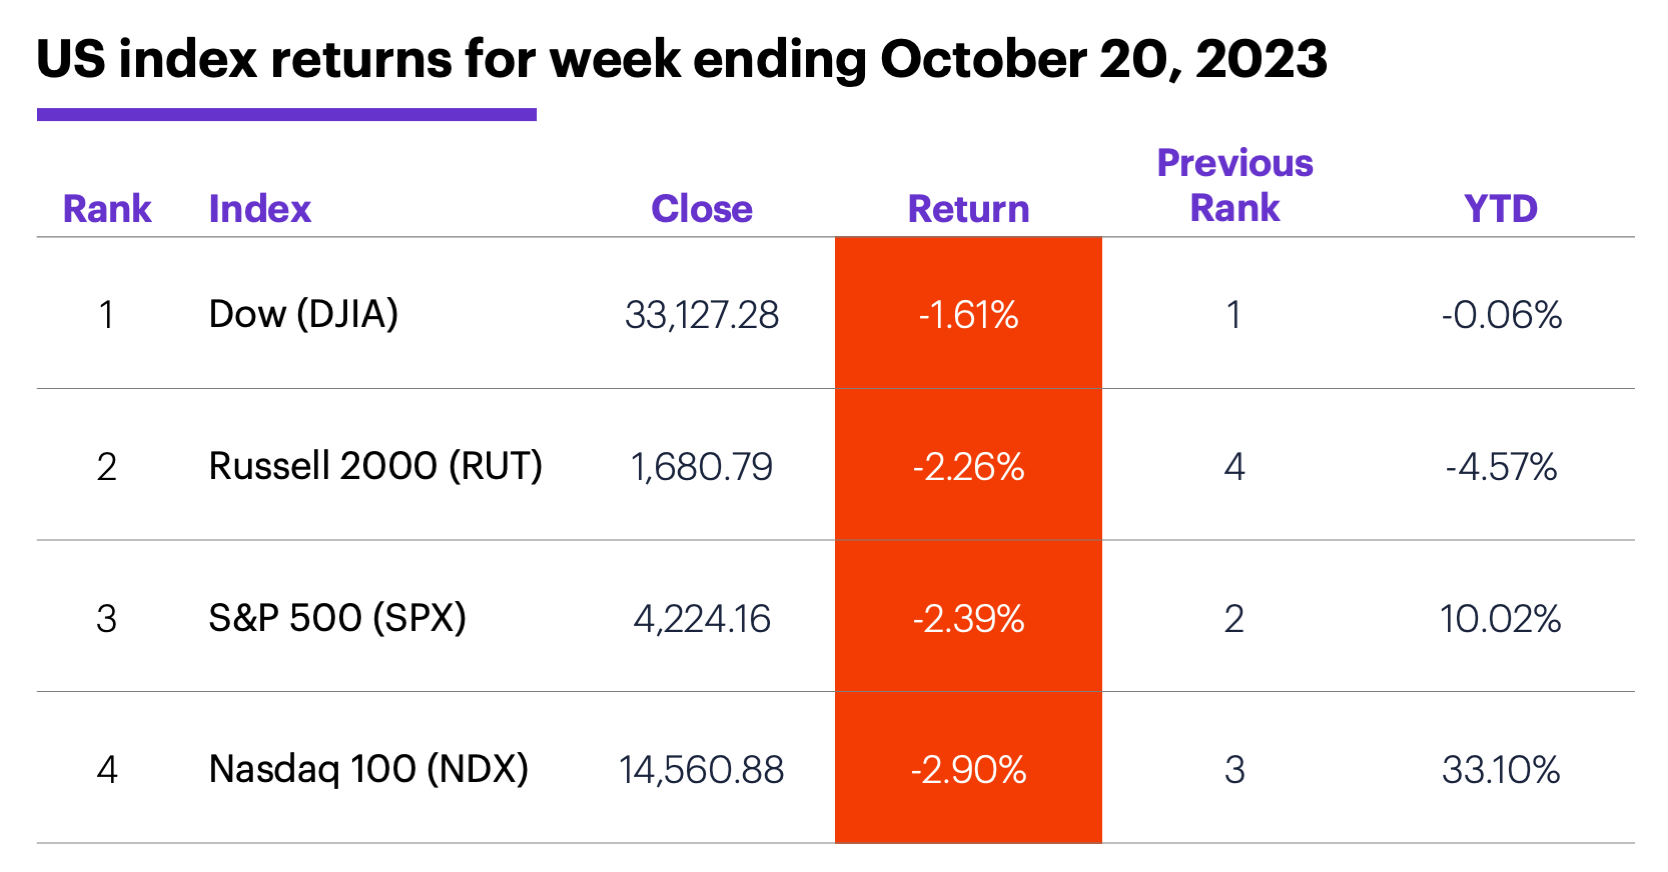 US stock index performance for week ending 10/20/23. S&P 500 (SPX), Nasdaq 100 (NDX), Russell 2000 (RUT), Dow Jones Industrial Average (DJIA).